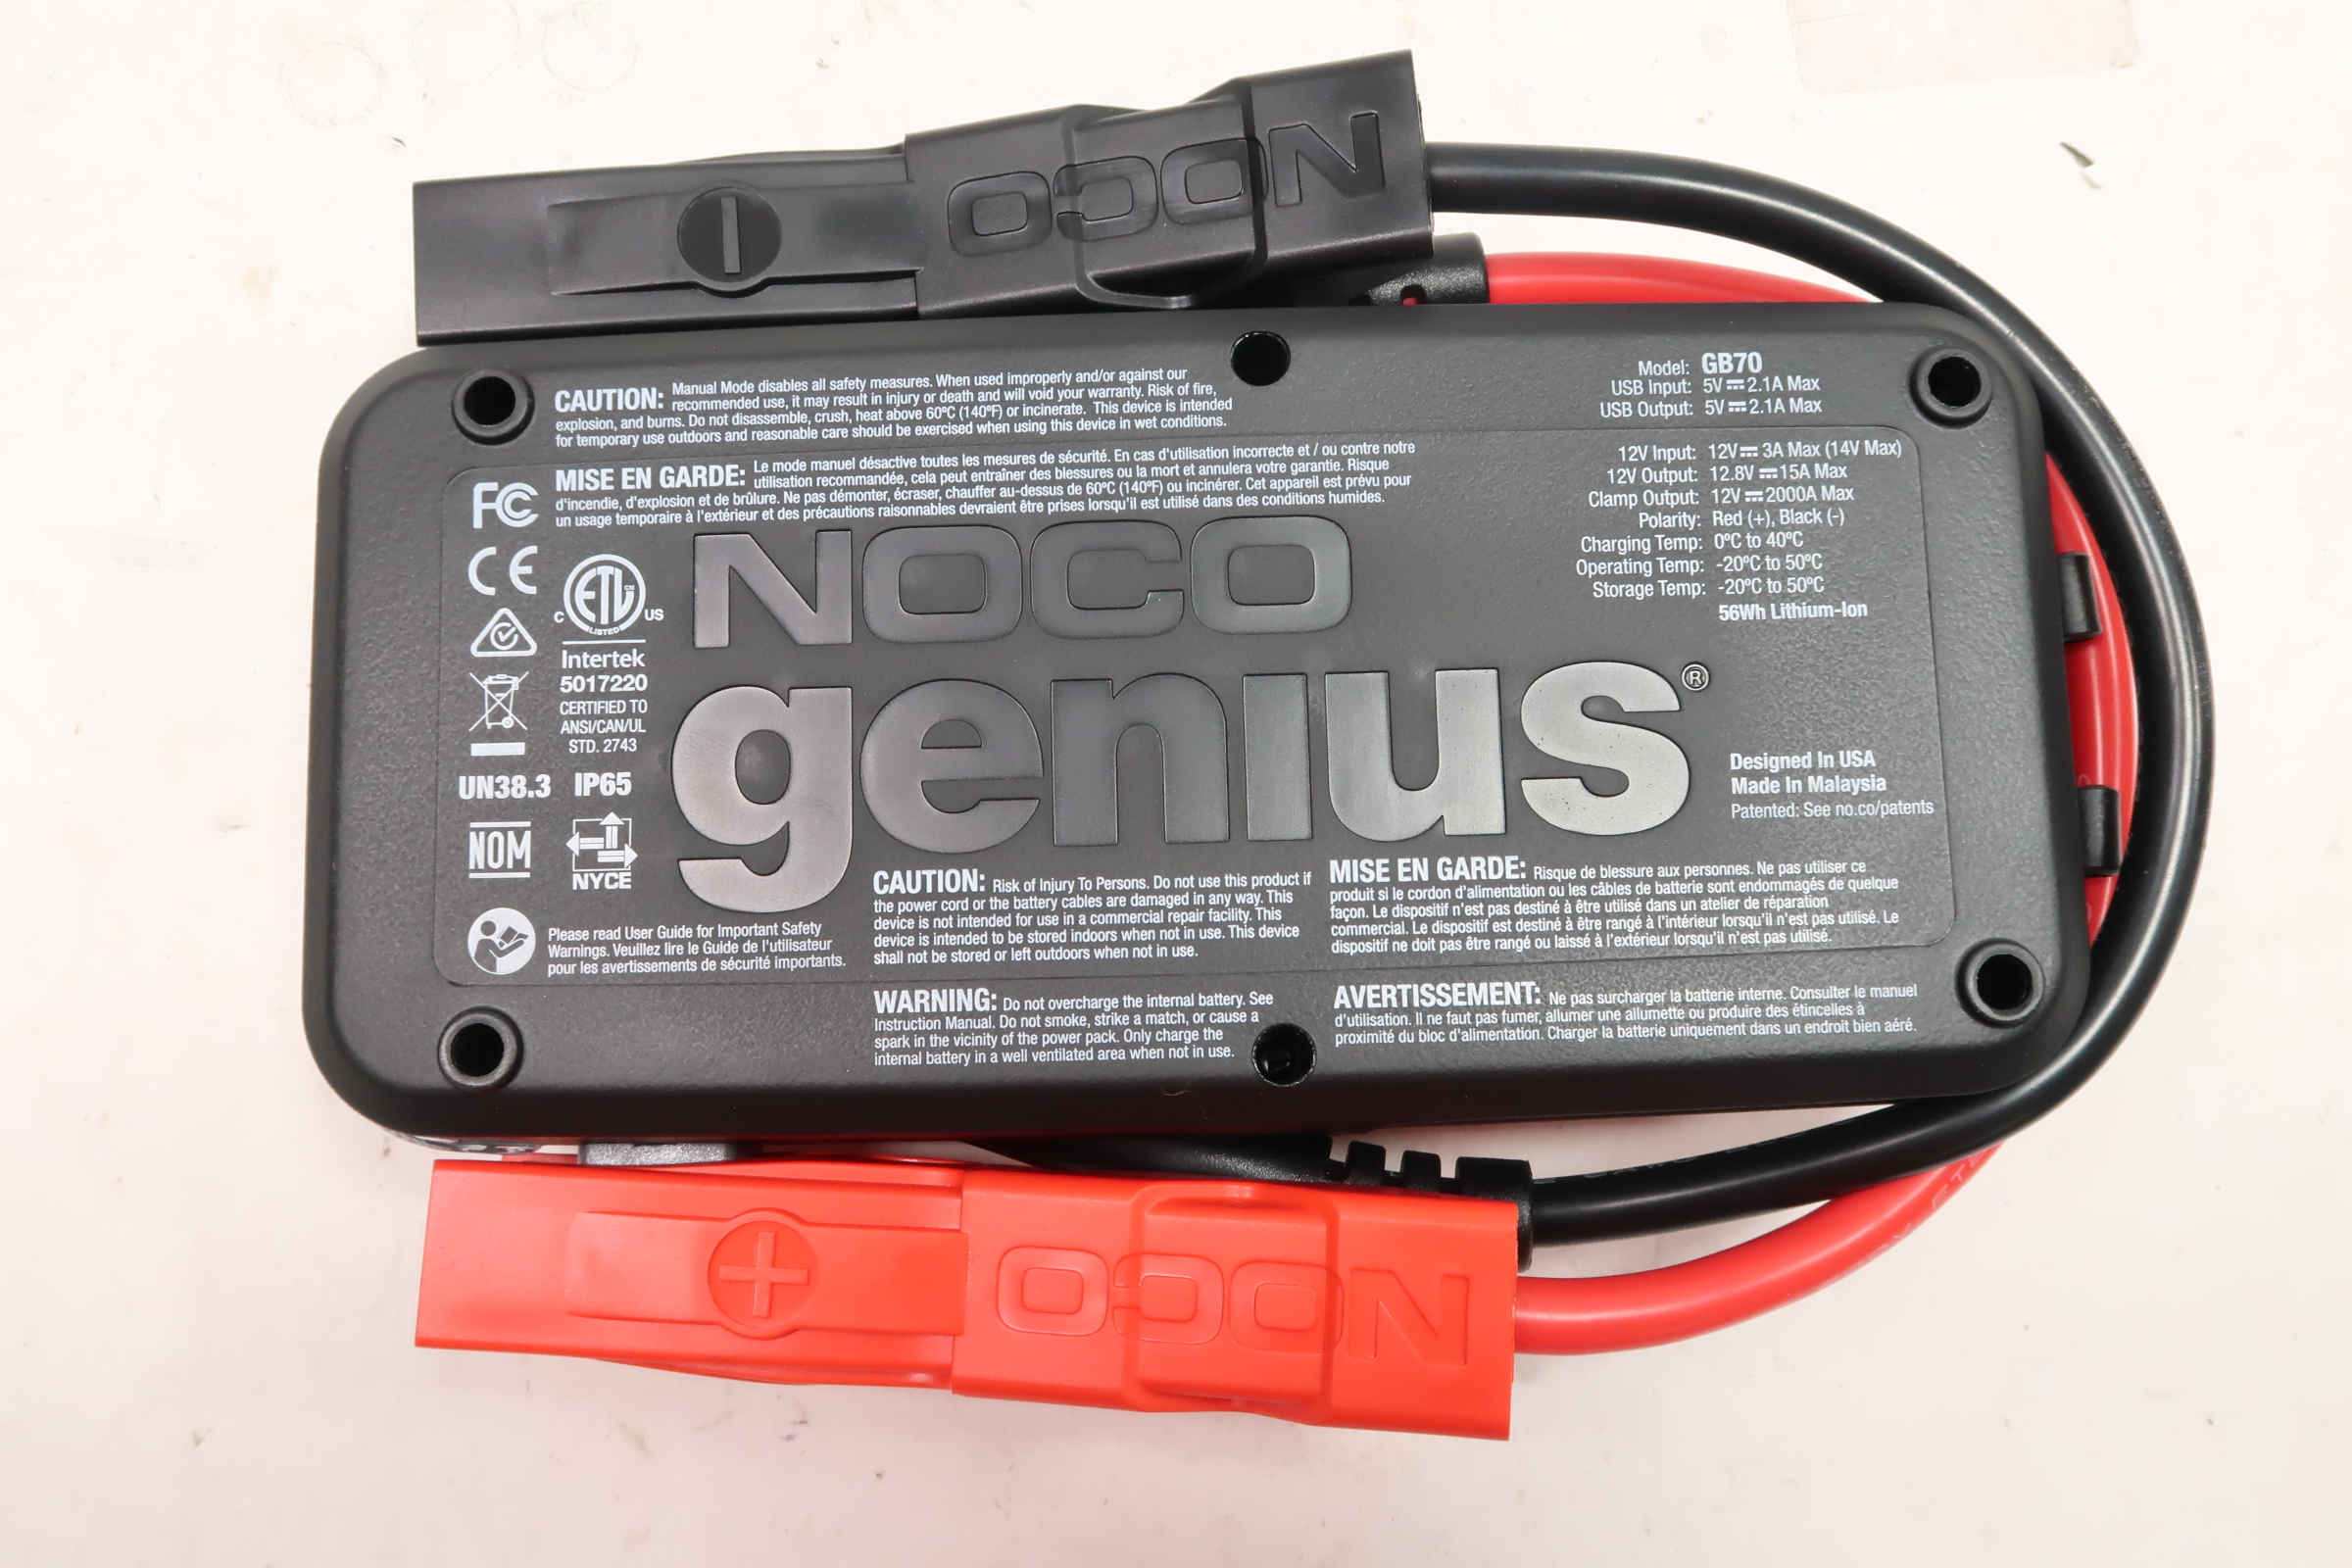 NOCO Boost HD GB70 2000-Amp 12-Volt UltraSafe Lithium Jump Starter-8673